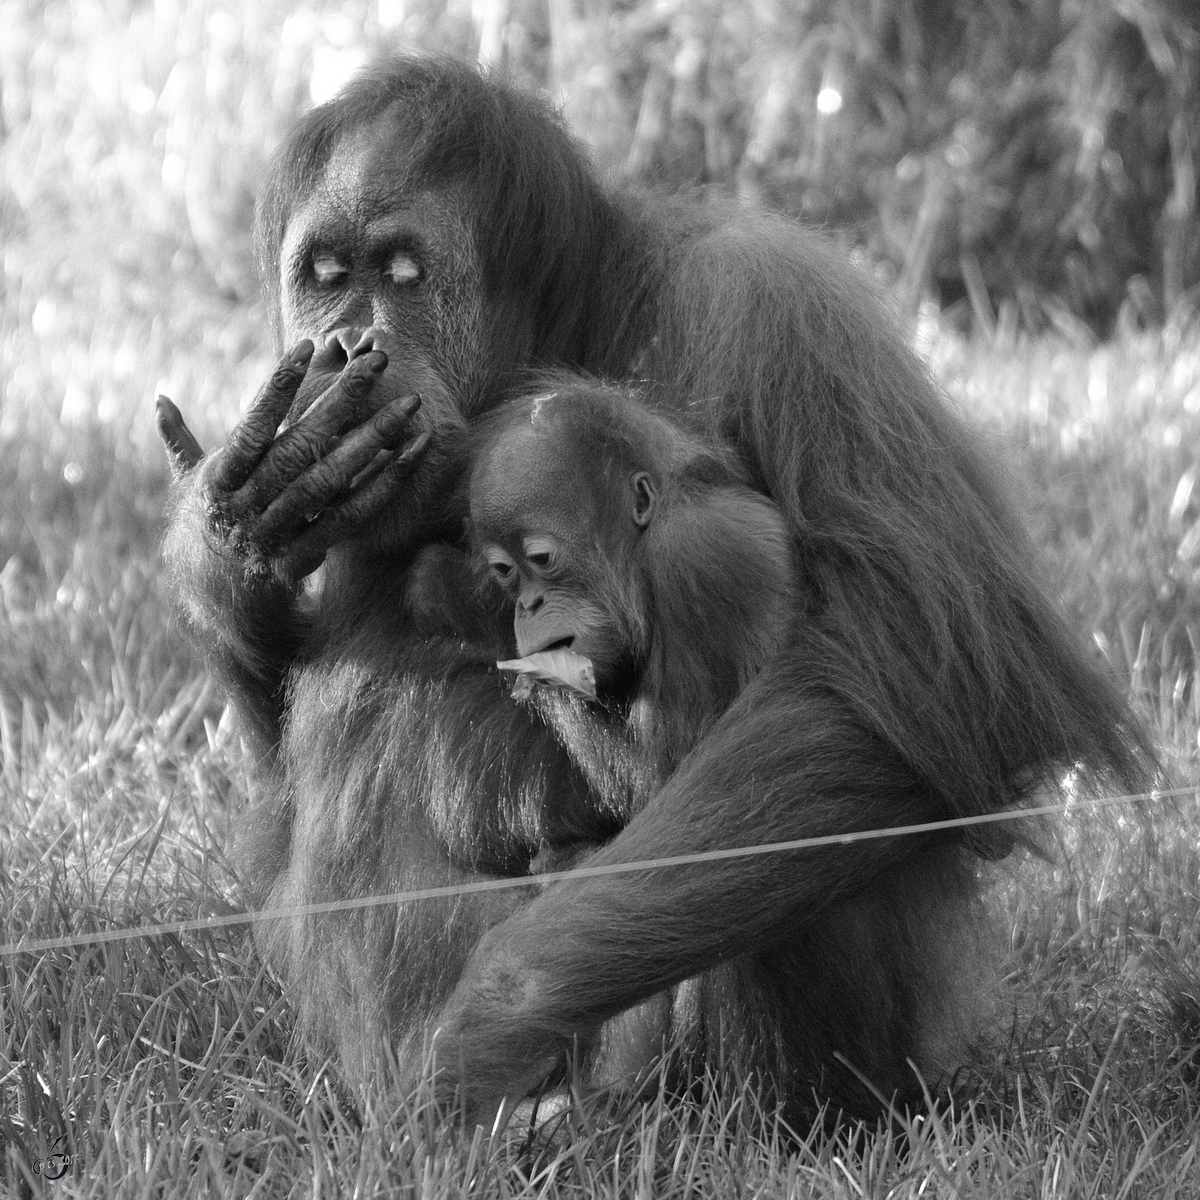 Sumatra-Orang-Utans im Zoo Dortmund. (November 2009)